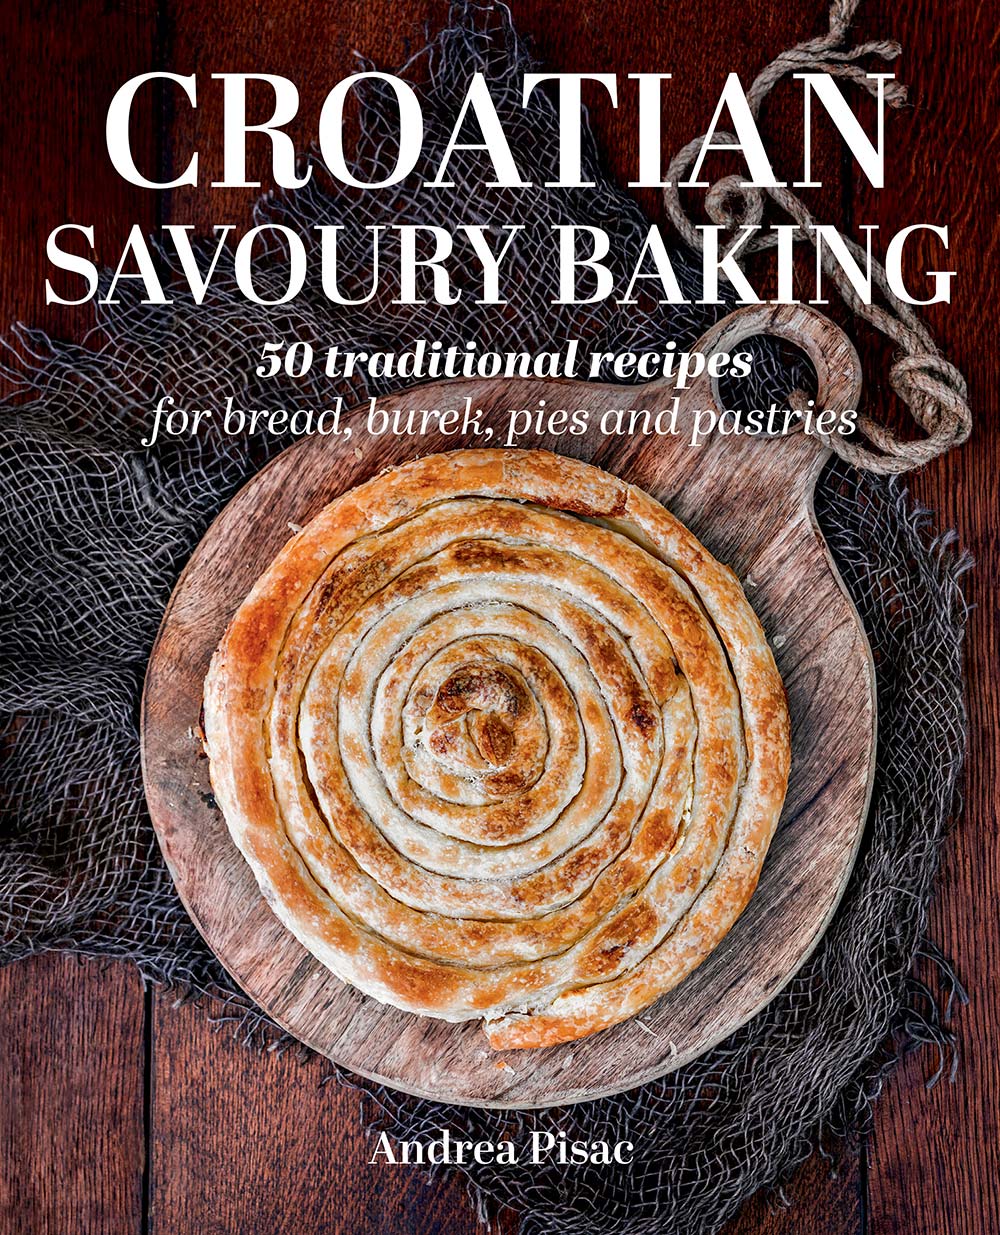 Croatian Savoury Baking cookbook